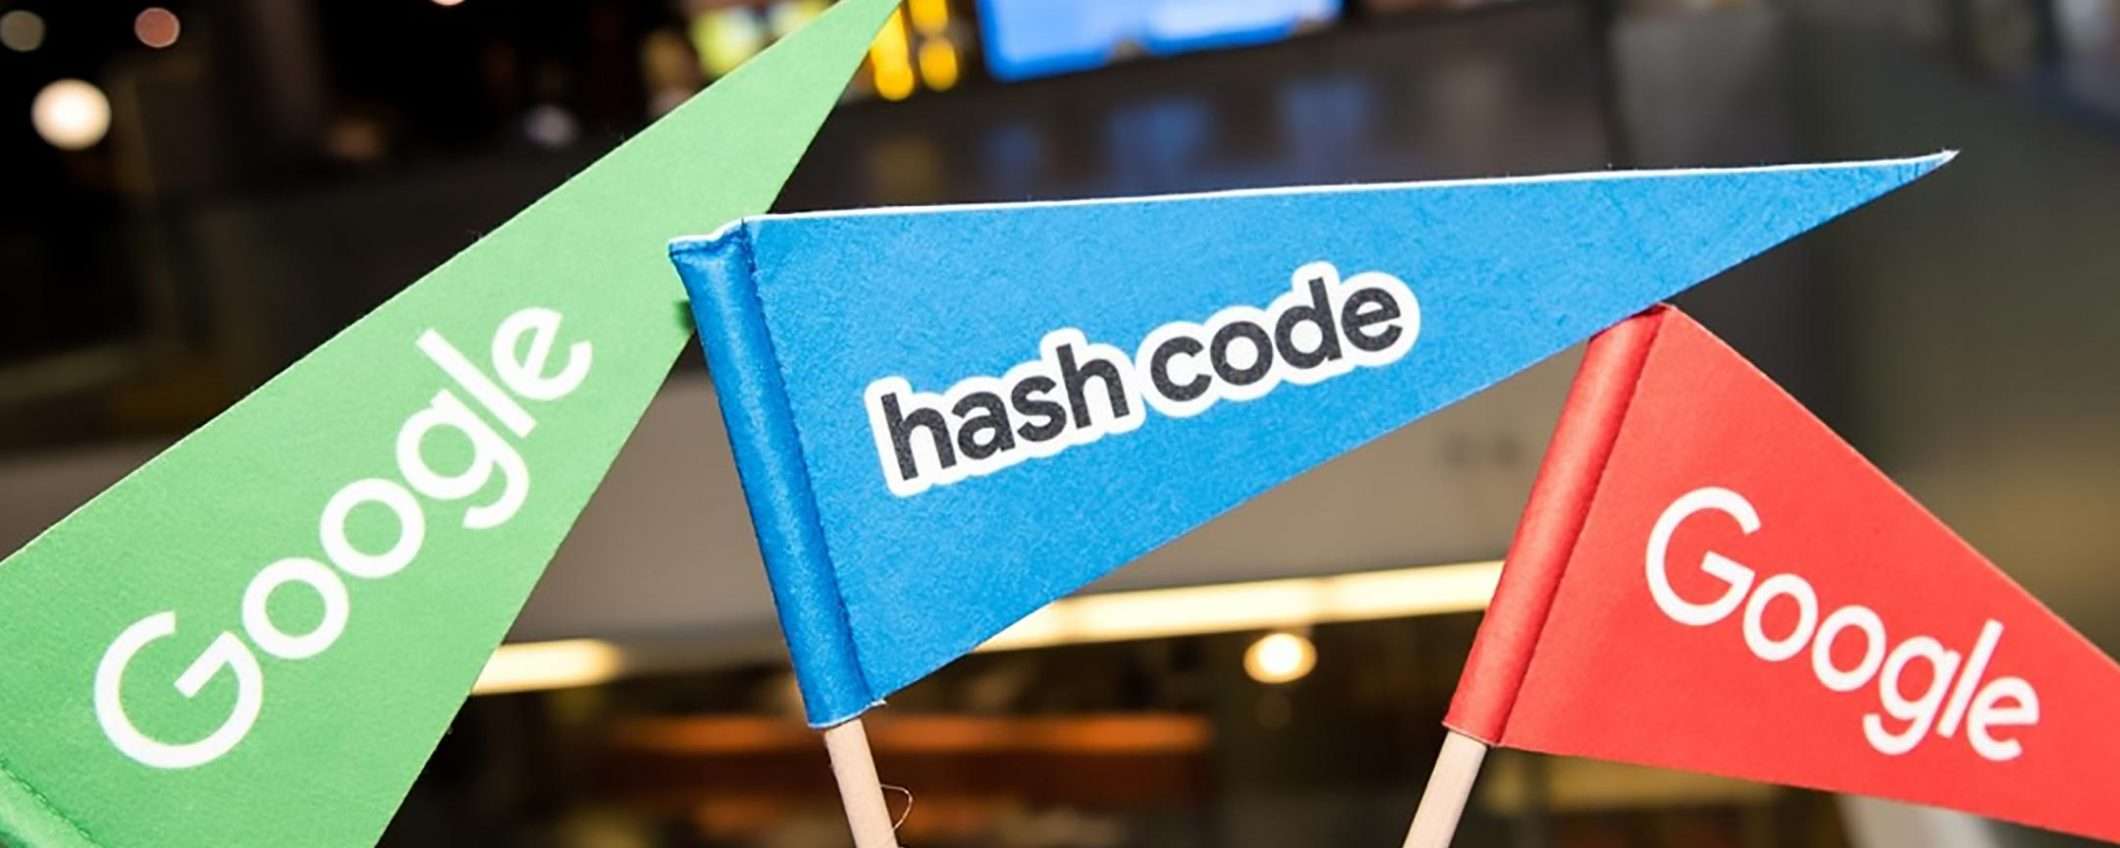 Google Hash Code 2021, quest'anno solo online